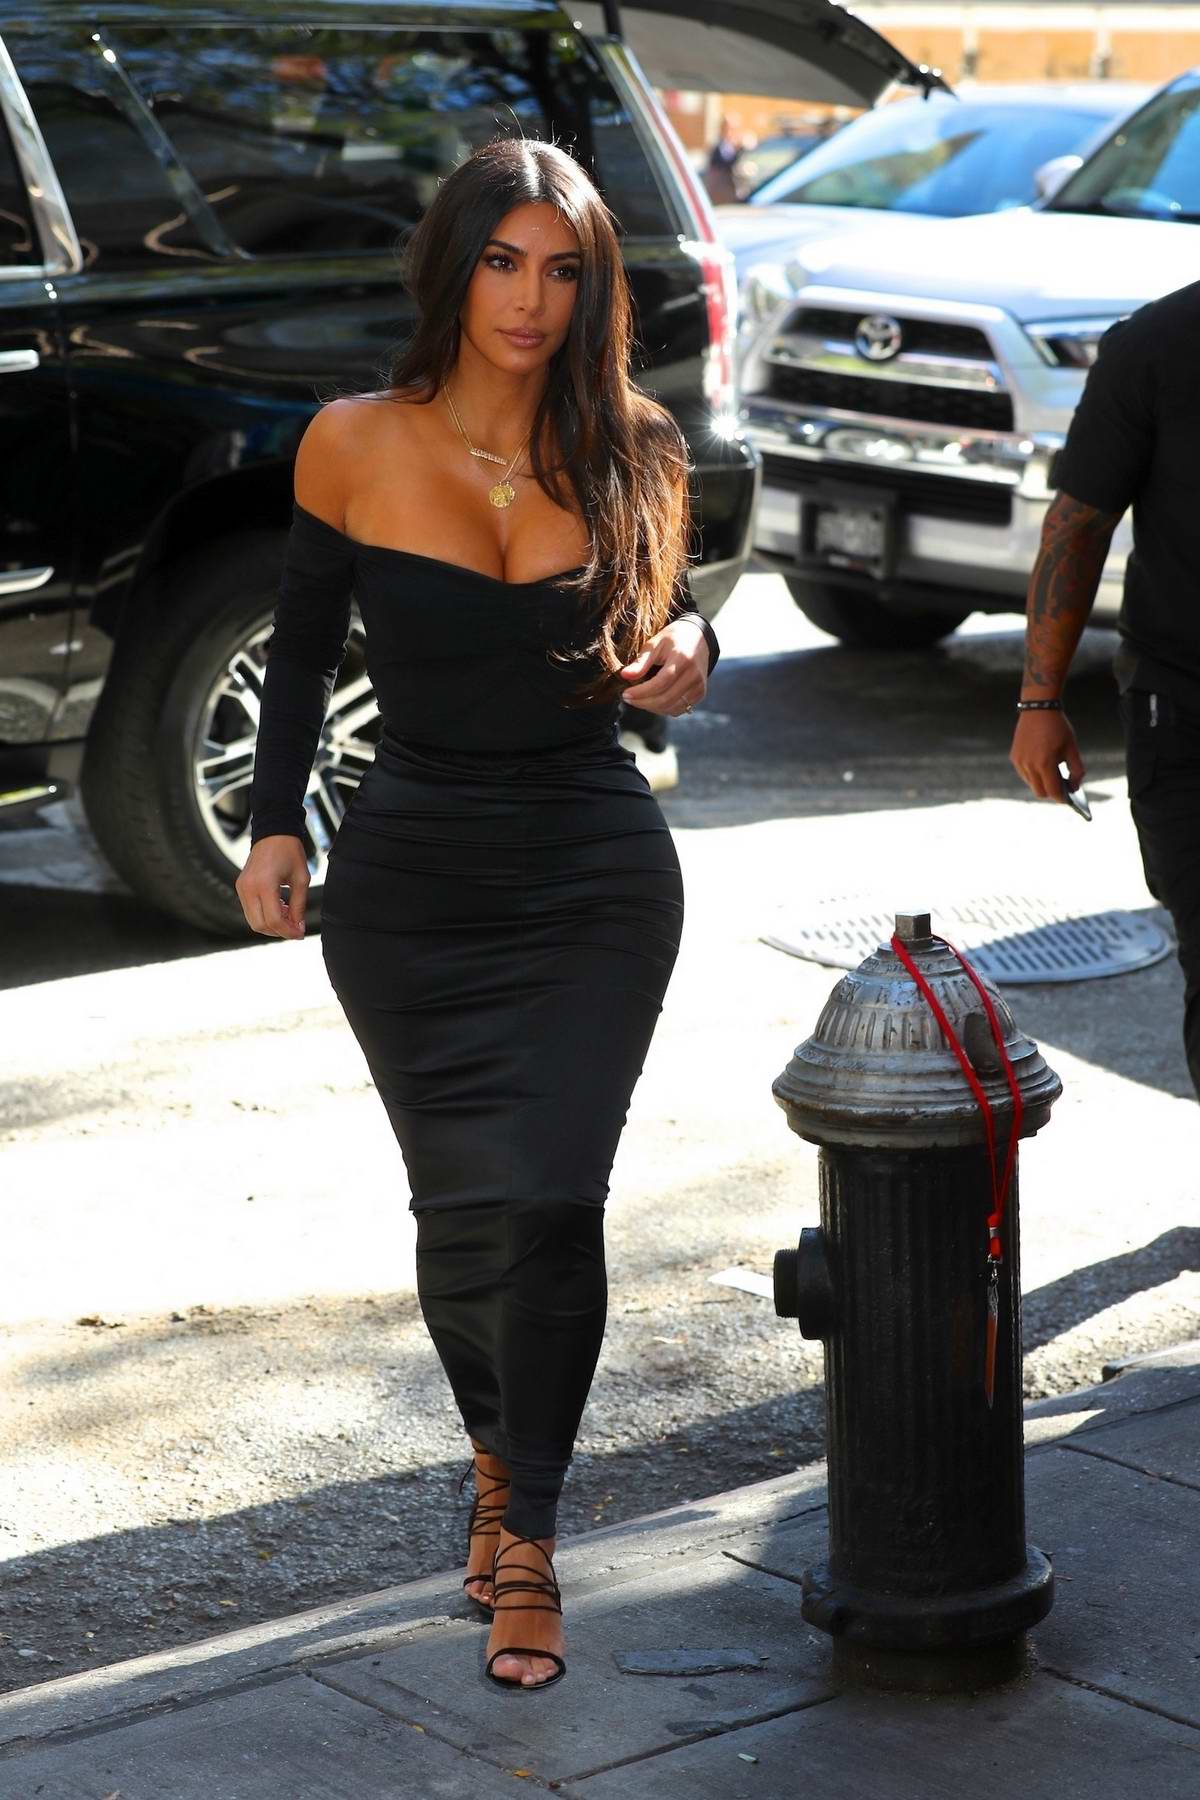 kim kardashian stuns in a form-fitting yellow dress as she arrives